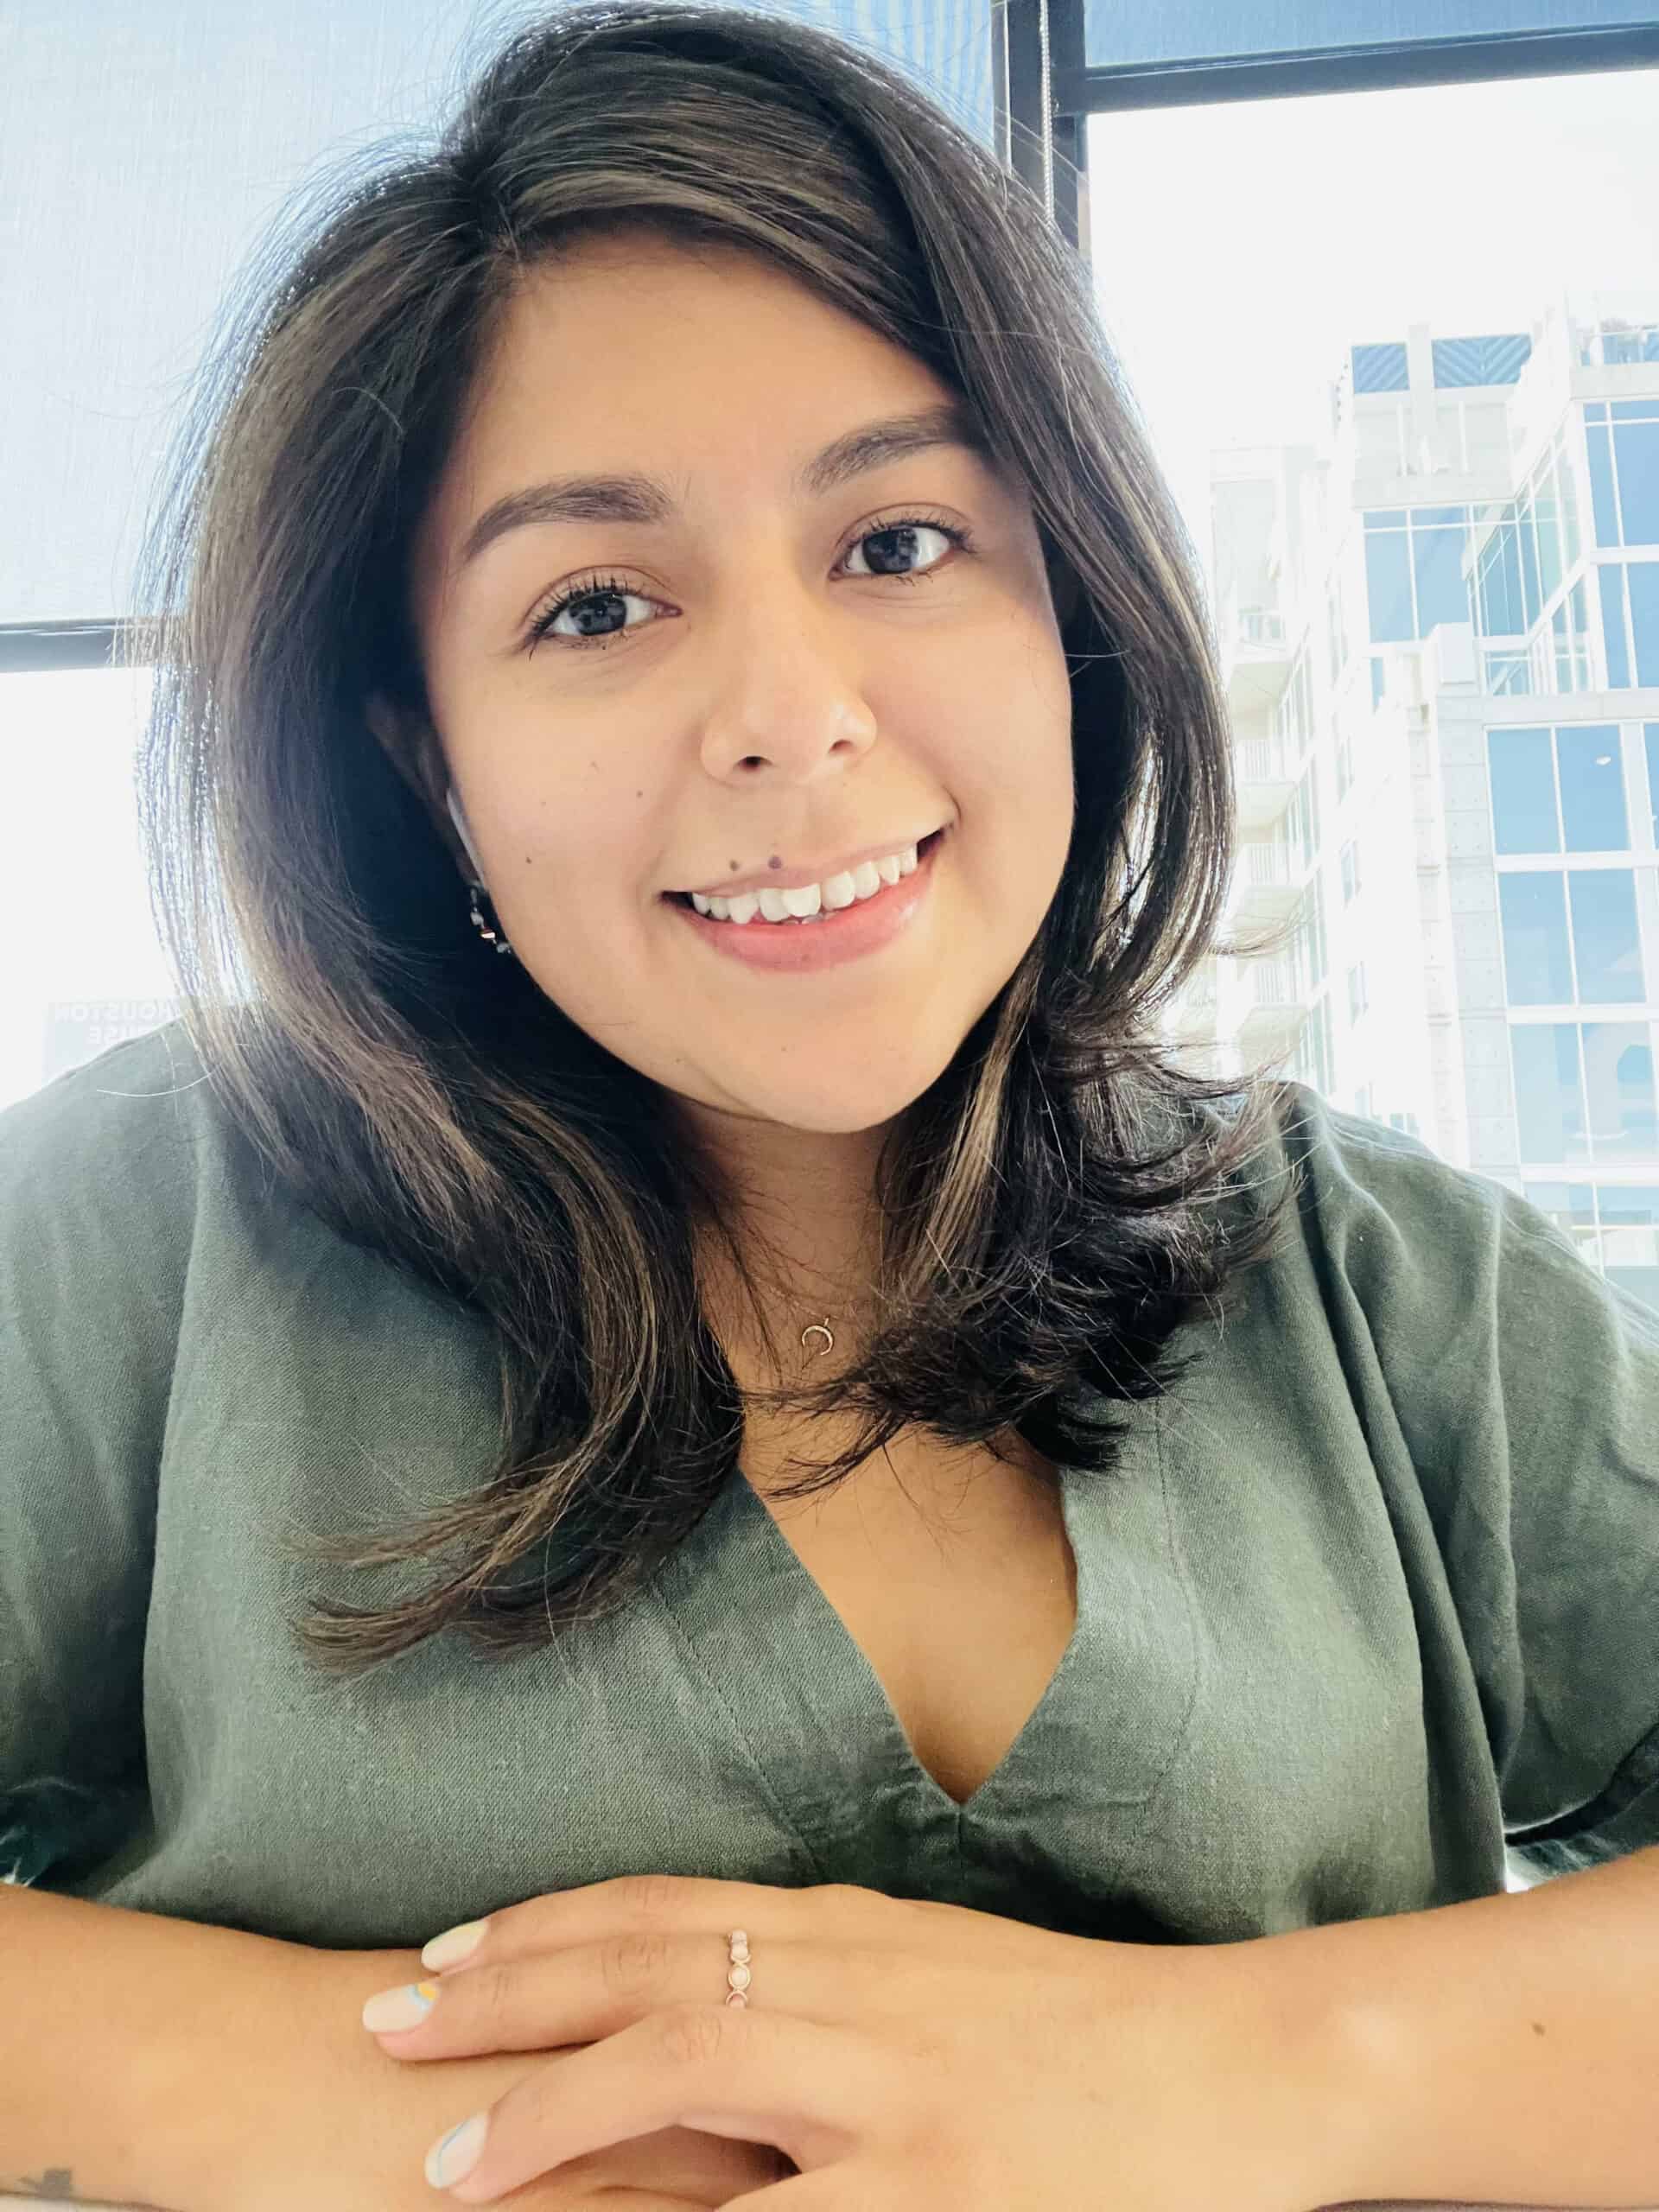 Zaira Cruz headshot for article about Latinas in STEM